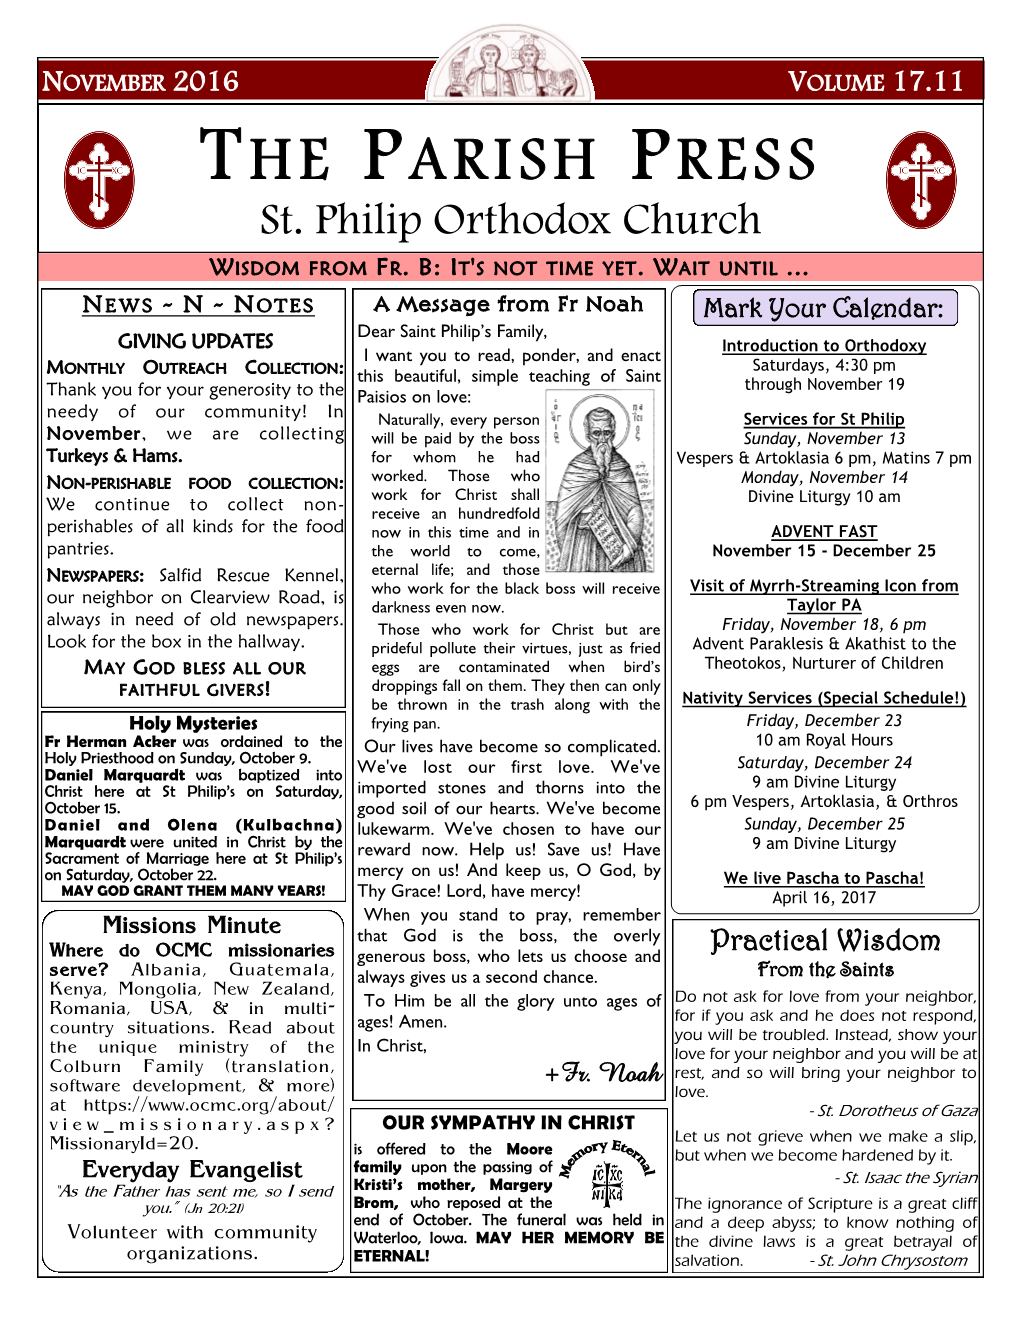 The Parish Press